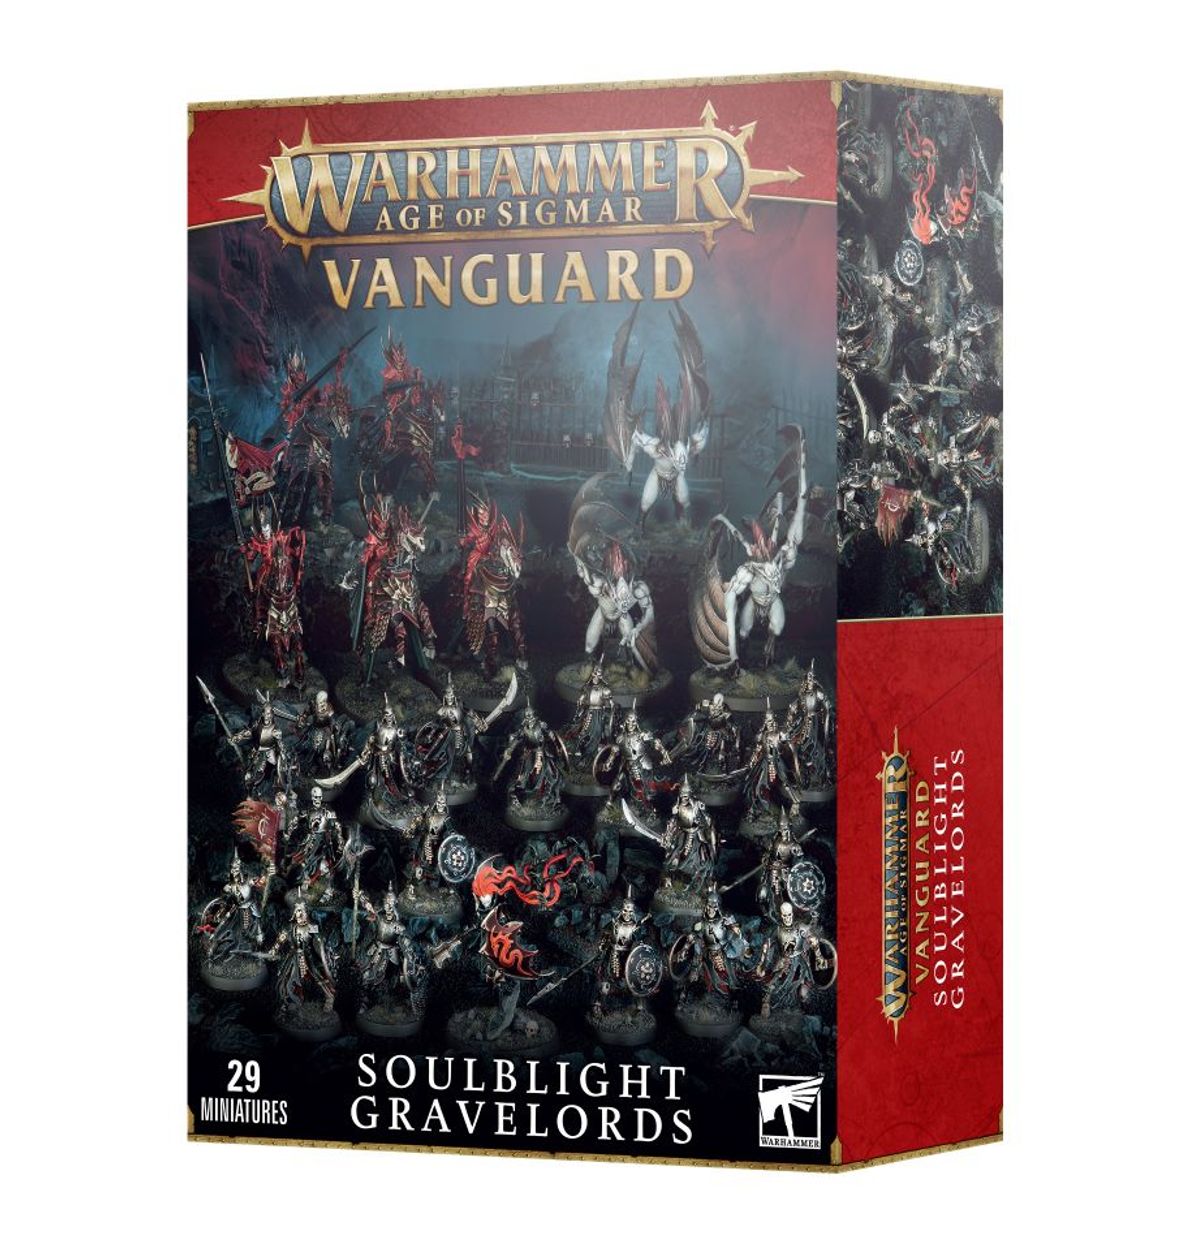 Миниатюры для игры Games Workshop Warhammer Age of Sigmar: Soulblight Gravelords 70-16